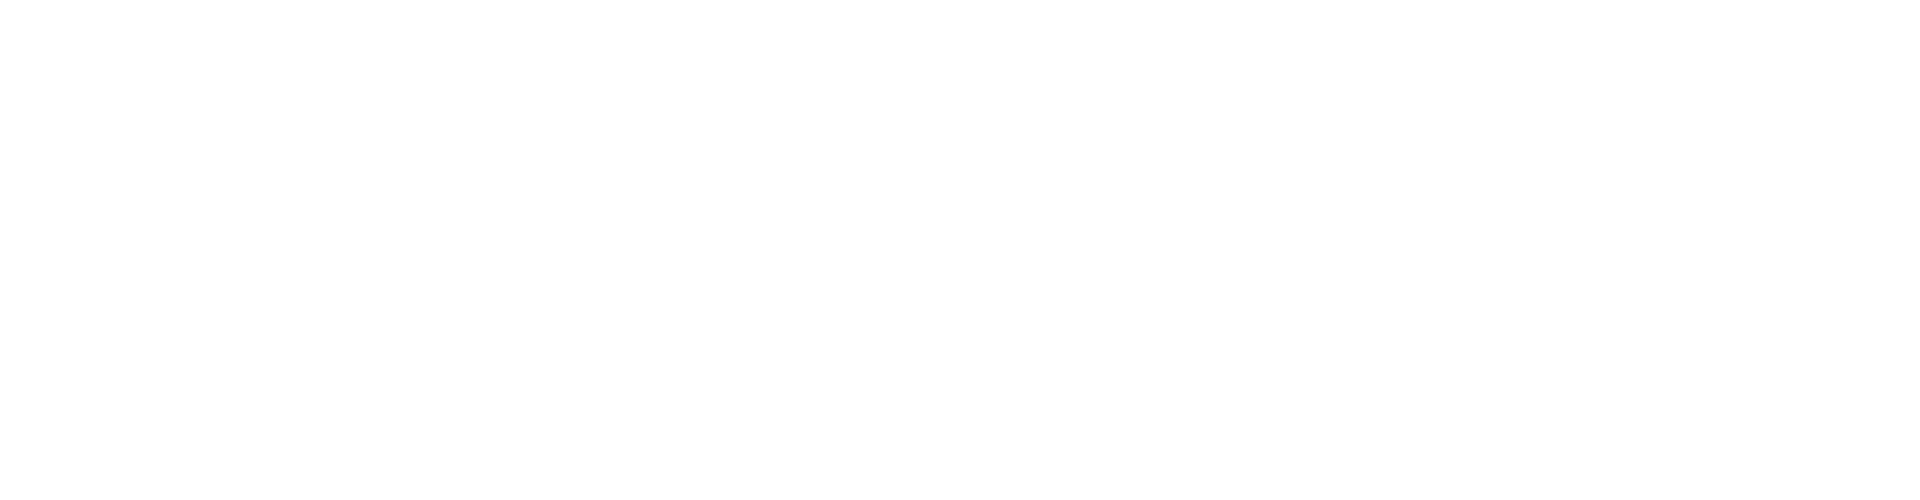 The Scuffed Series 10 - Sacrifice for Blood or Karma